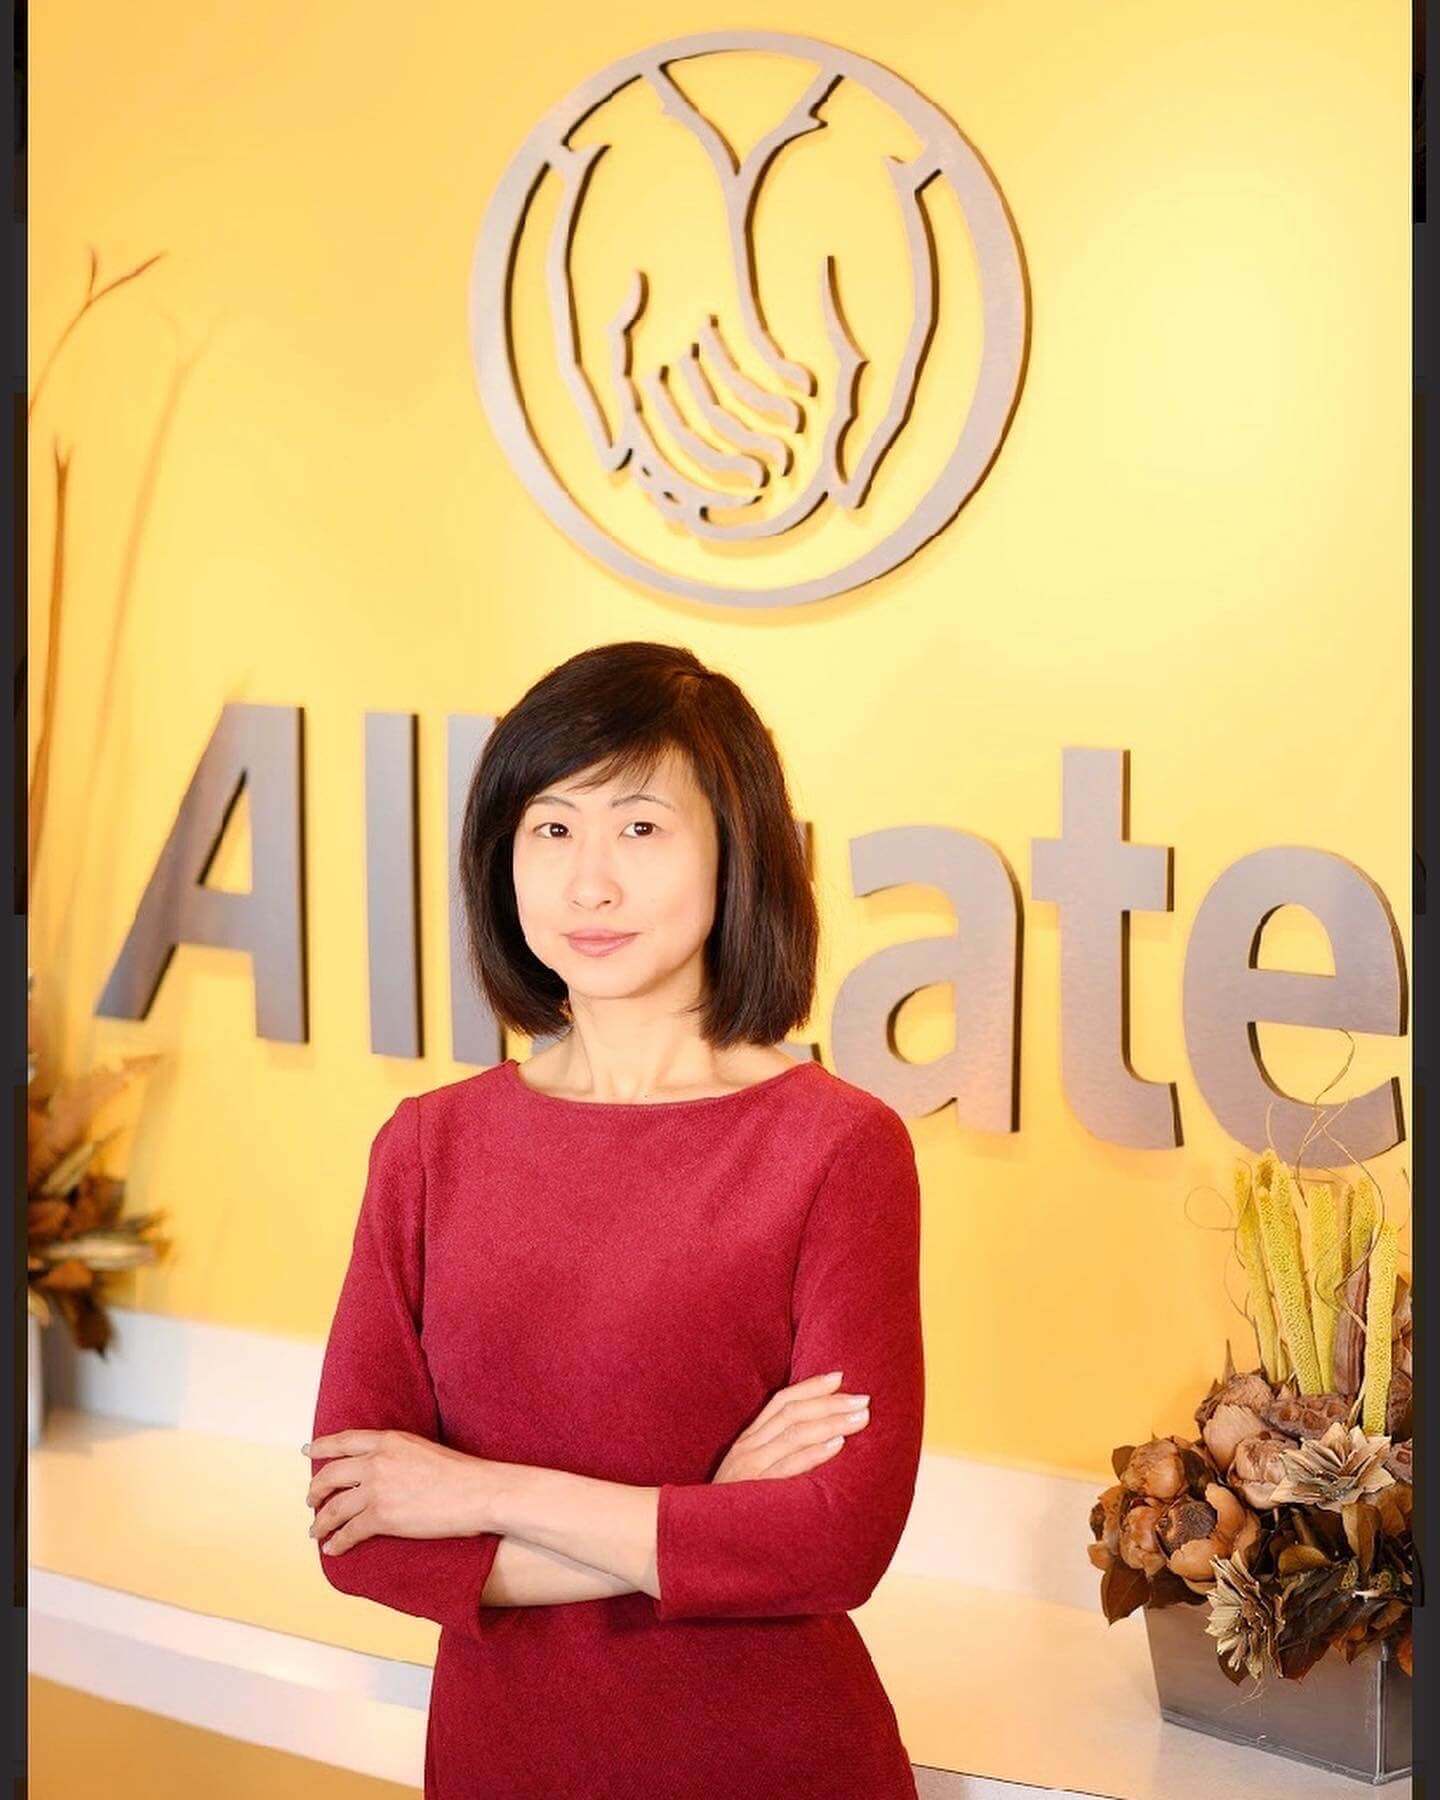 Allstate insurance agent Silvia Xue